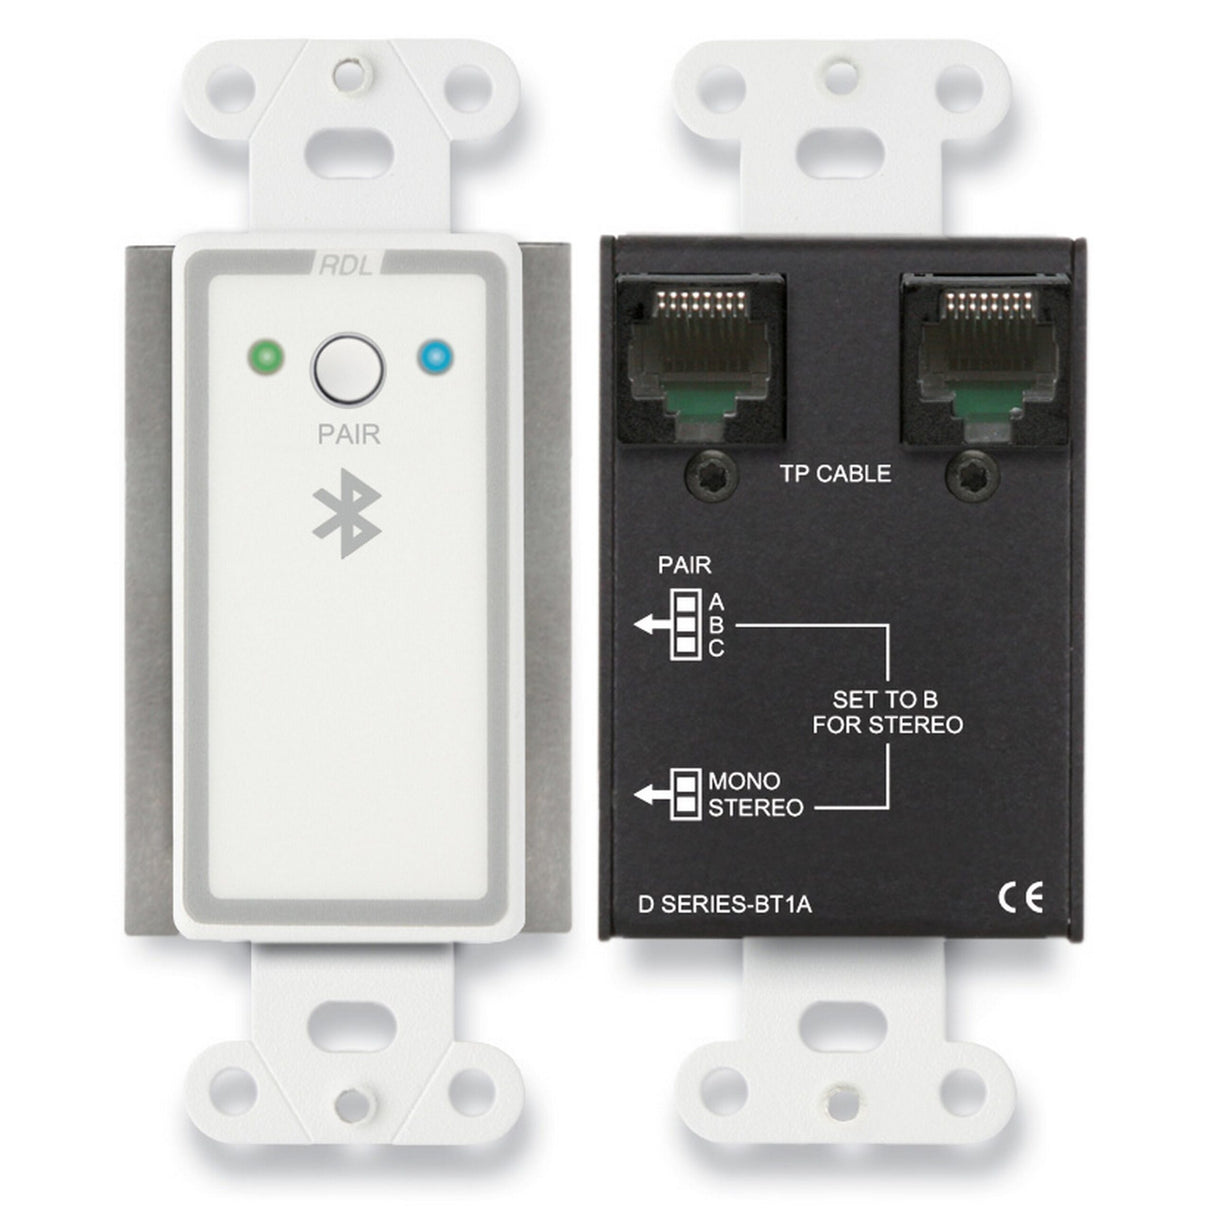 RDL D-BT1A Wall Mounted Bluetooth Audio Format-A Interface